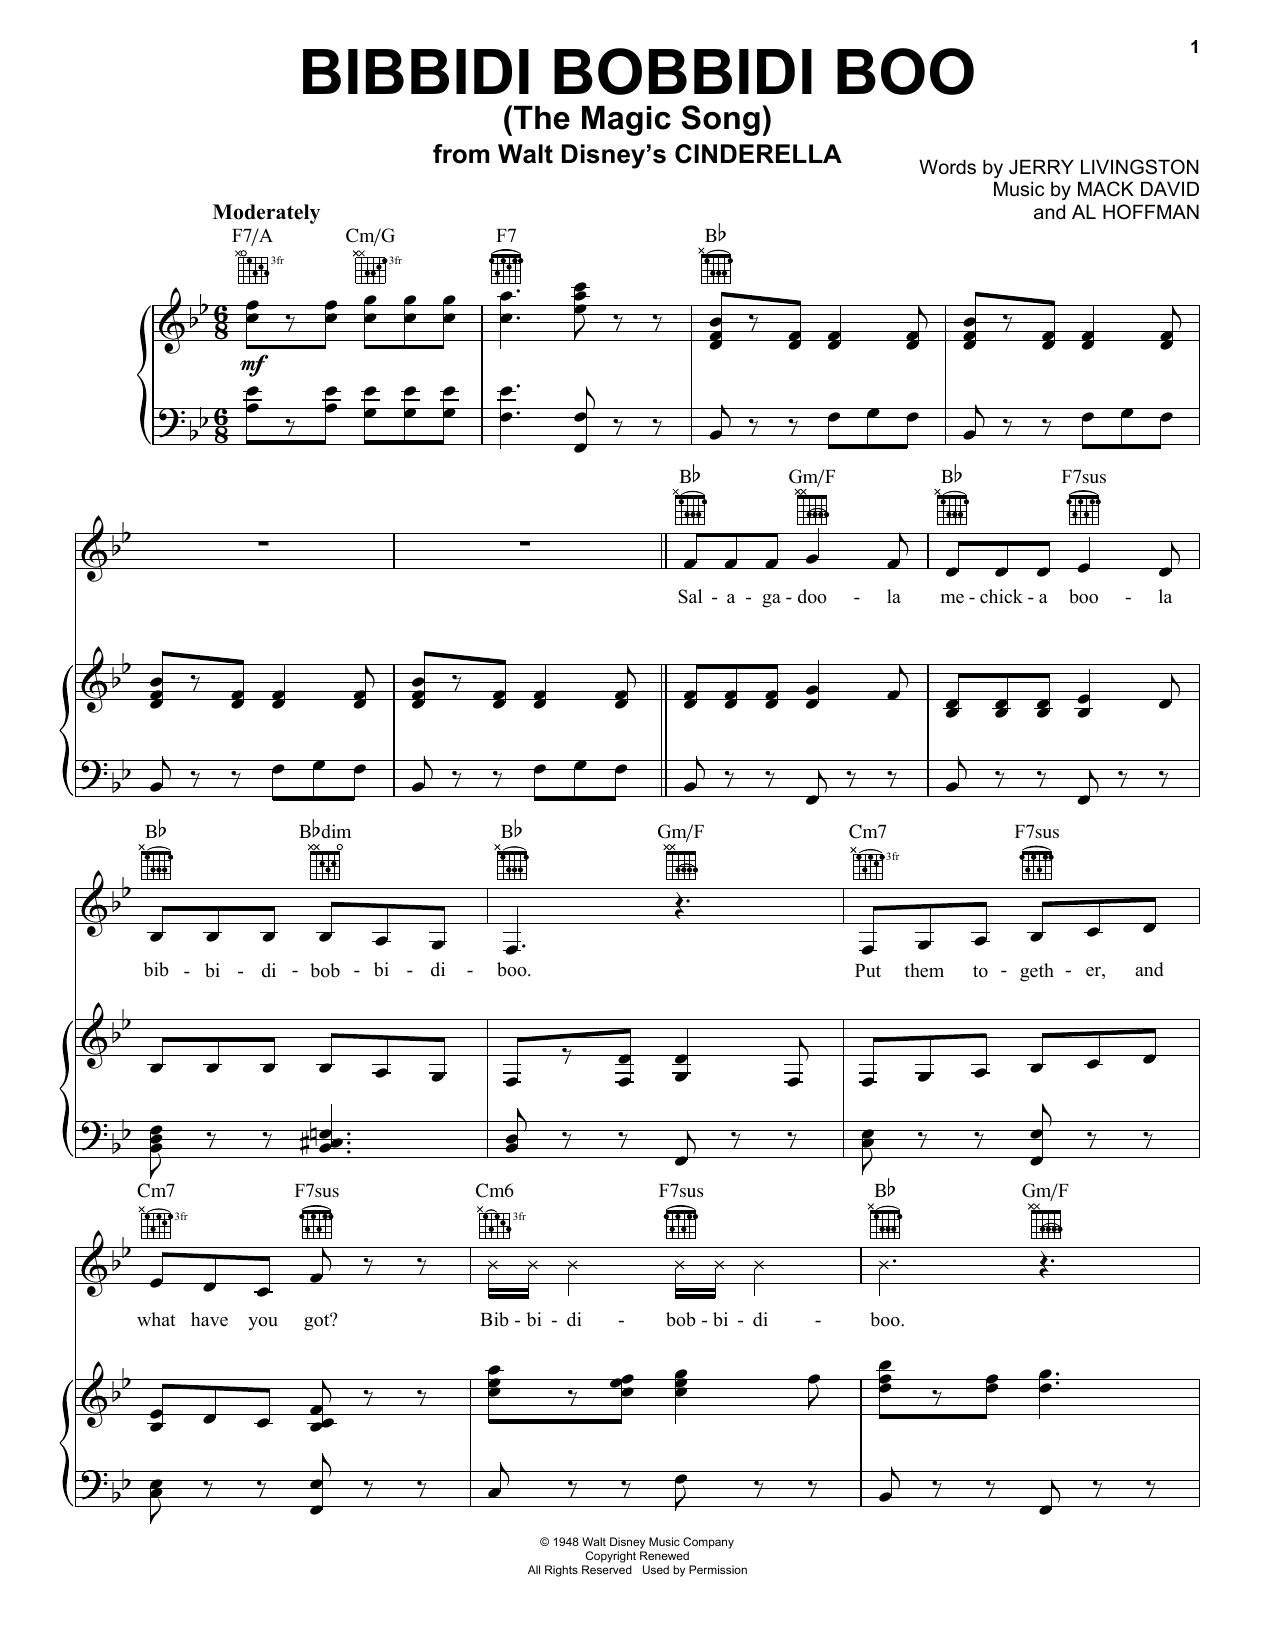 Patrick Doyle Bibbidi-Bobbidi-Boo (The Magic Song) Sheet Music Notes & Chords for Easy Piano - Download or Print PDF